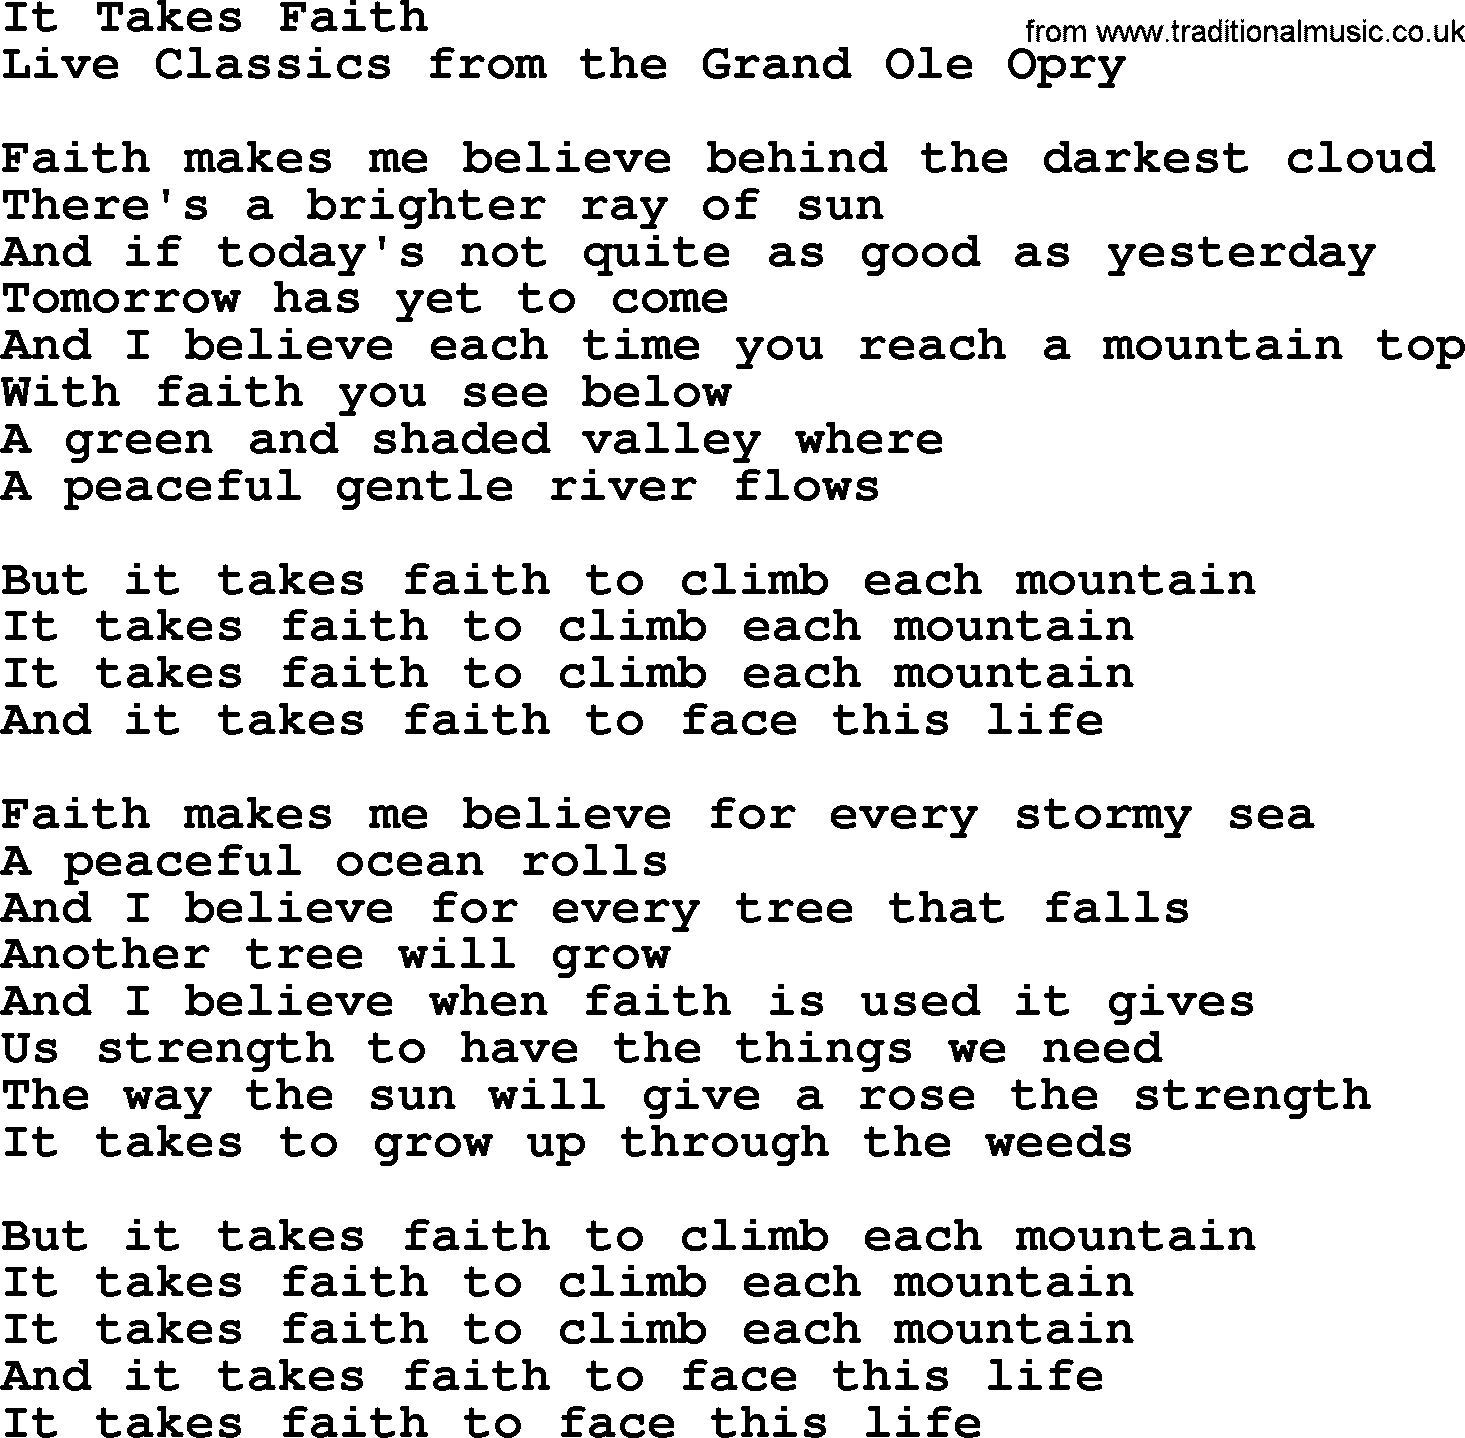 Marty Robbins song: It Takes Faith, lyrics